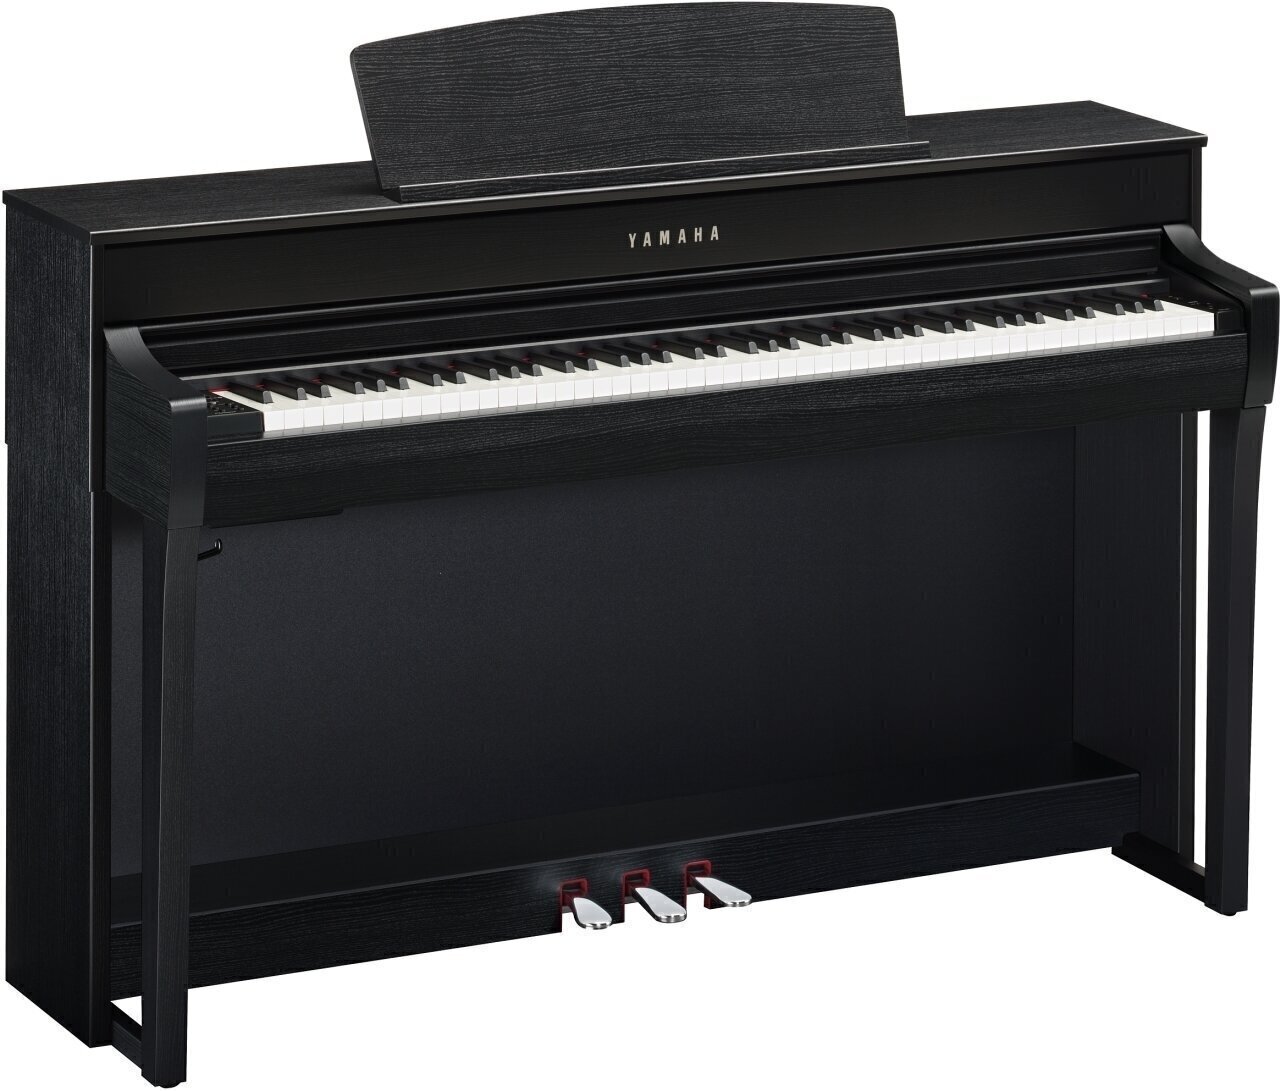 Digital Piano Yamaha CLP 745 Black Digital Piano